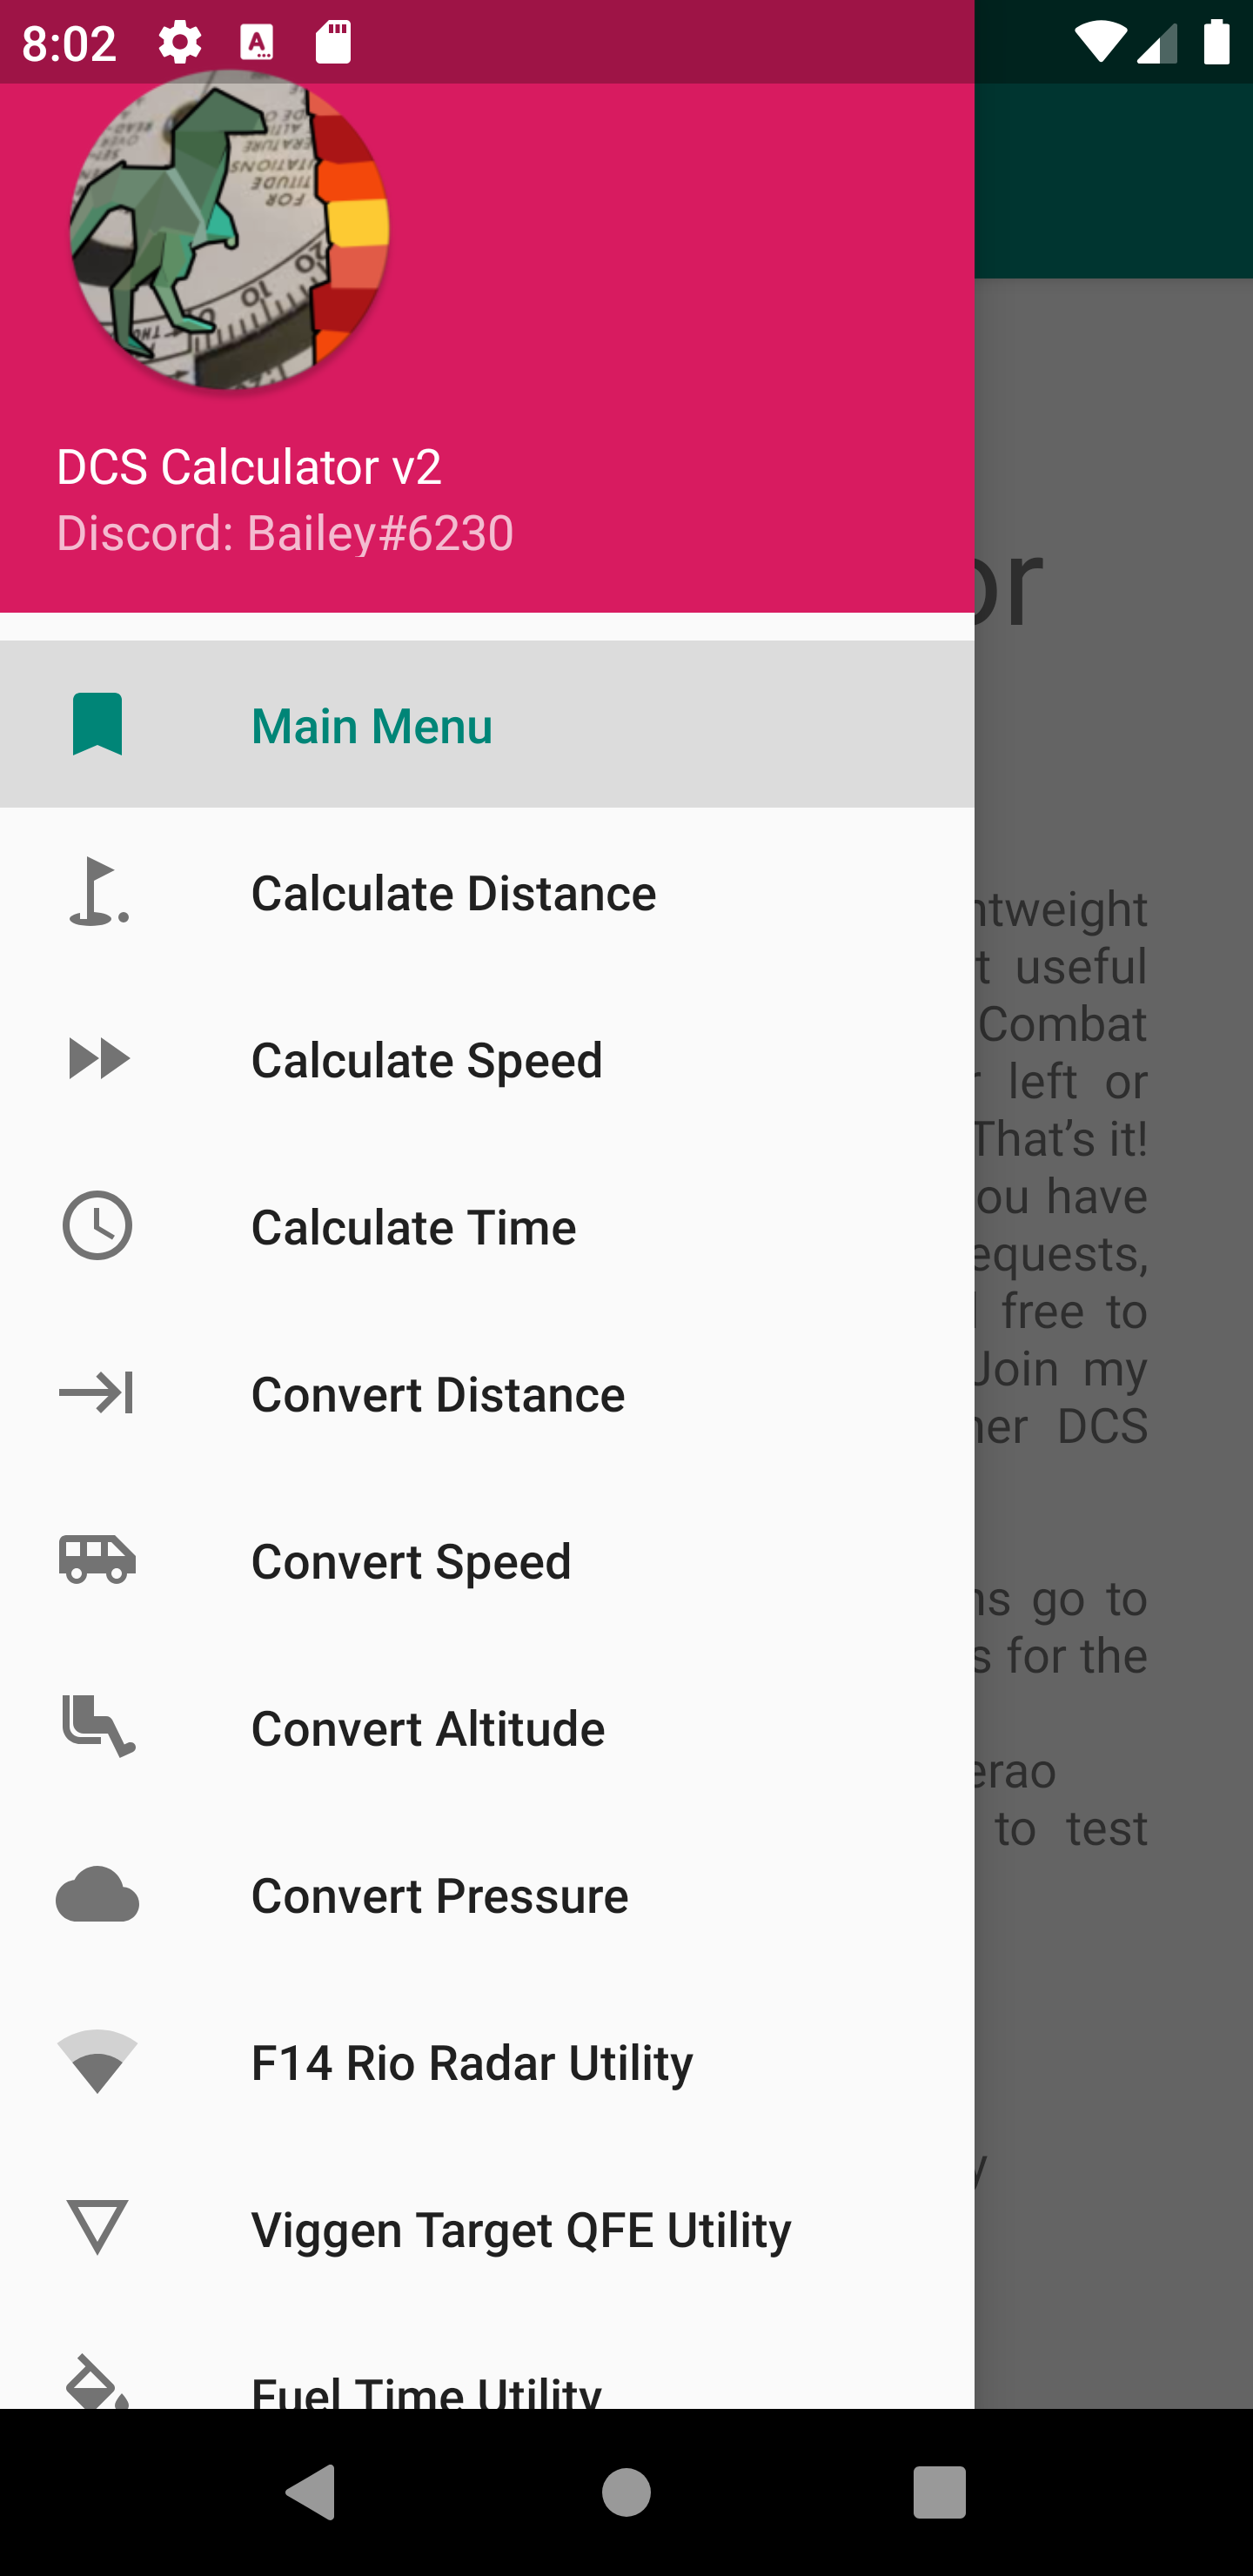 DCS-Calculator v2 Android App by Bailey